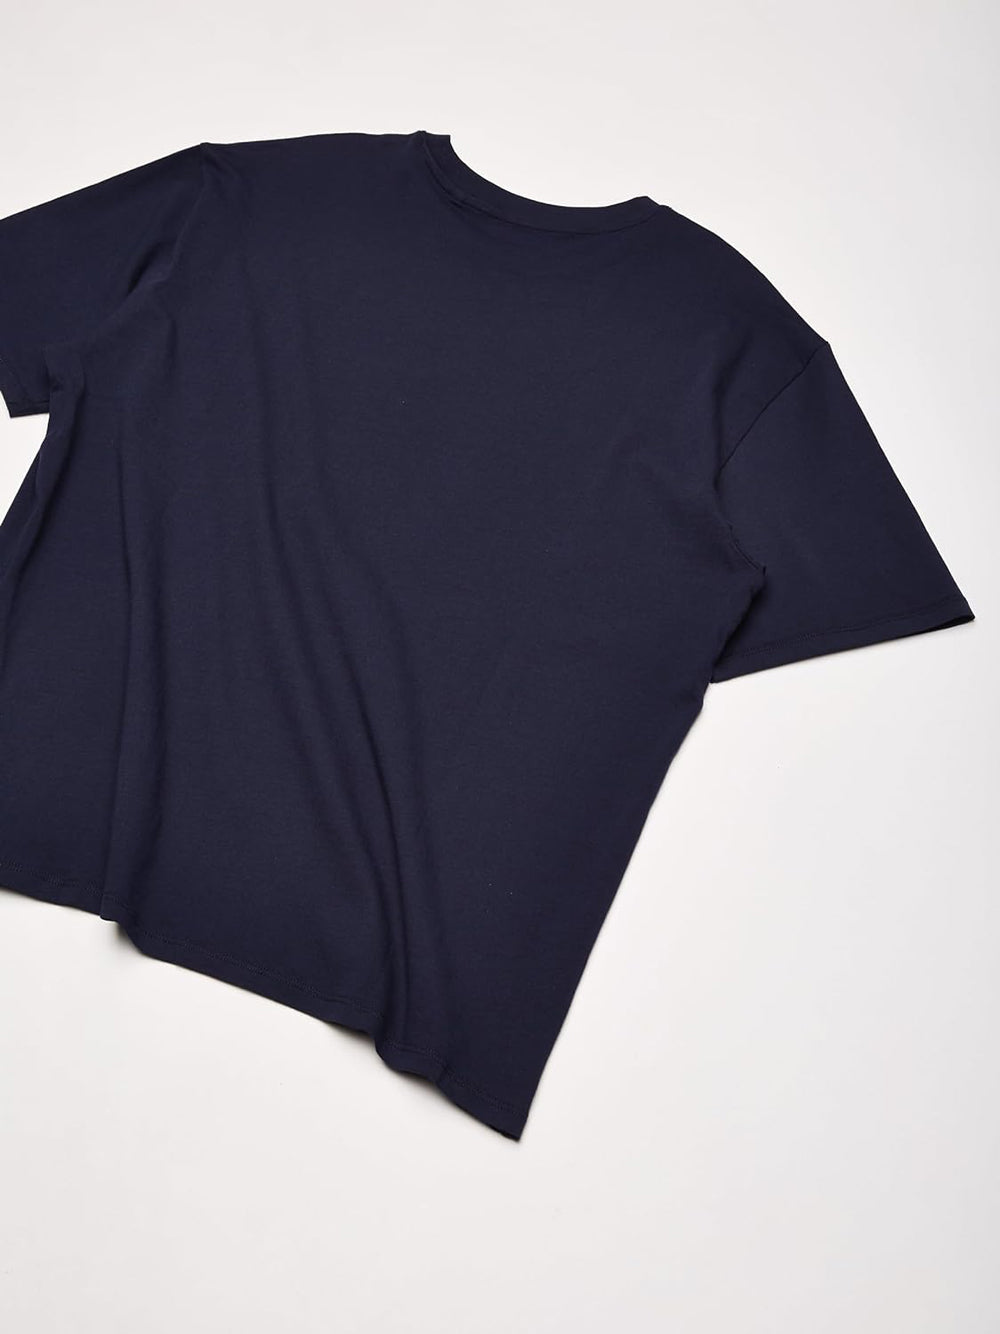 GUESS T-shirt Uomo - Blu modello M4RI81K9RM1